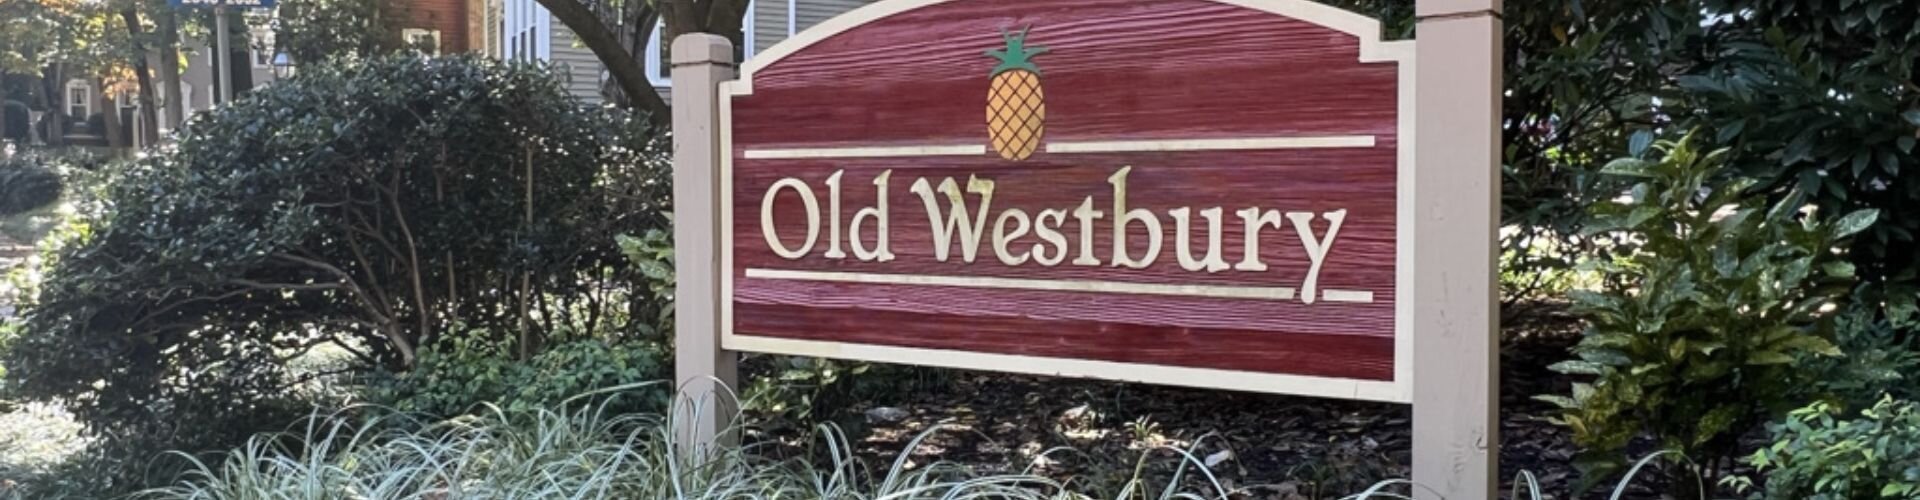 Old Westbury - Cash Buyers in Long Island